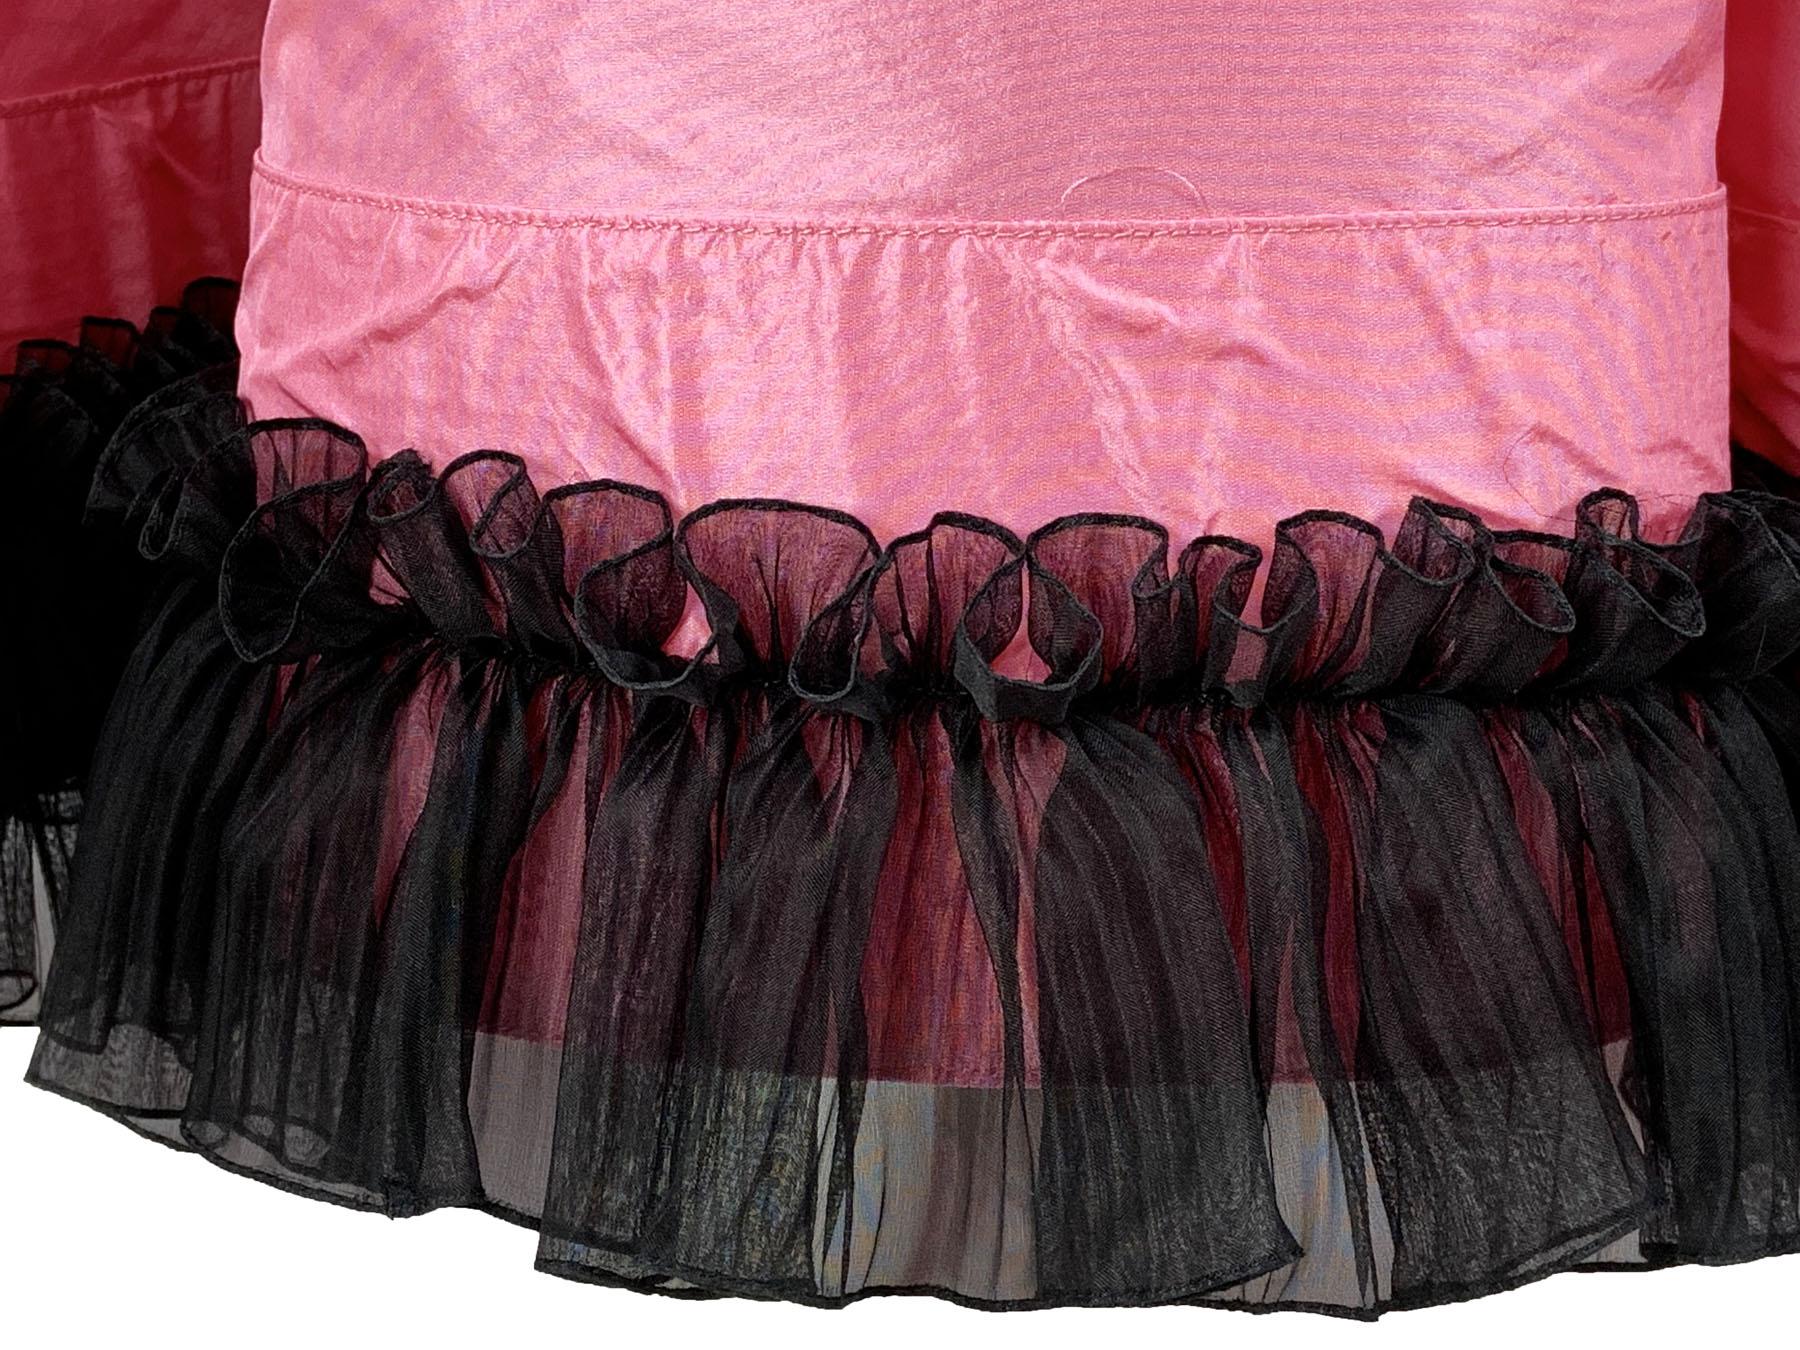 Oscar de la Renta S/S 2004 Collection Pink Silk Taffeta Embellished Dress Gown 8 For Sale 9